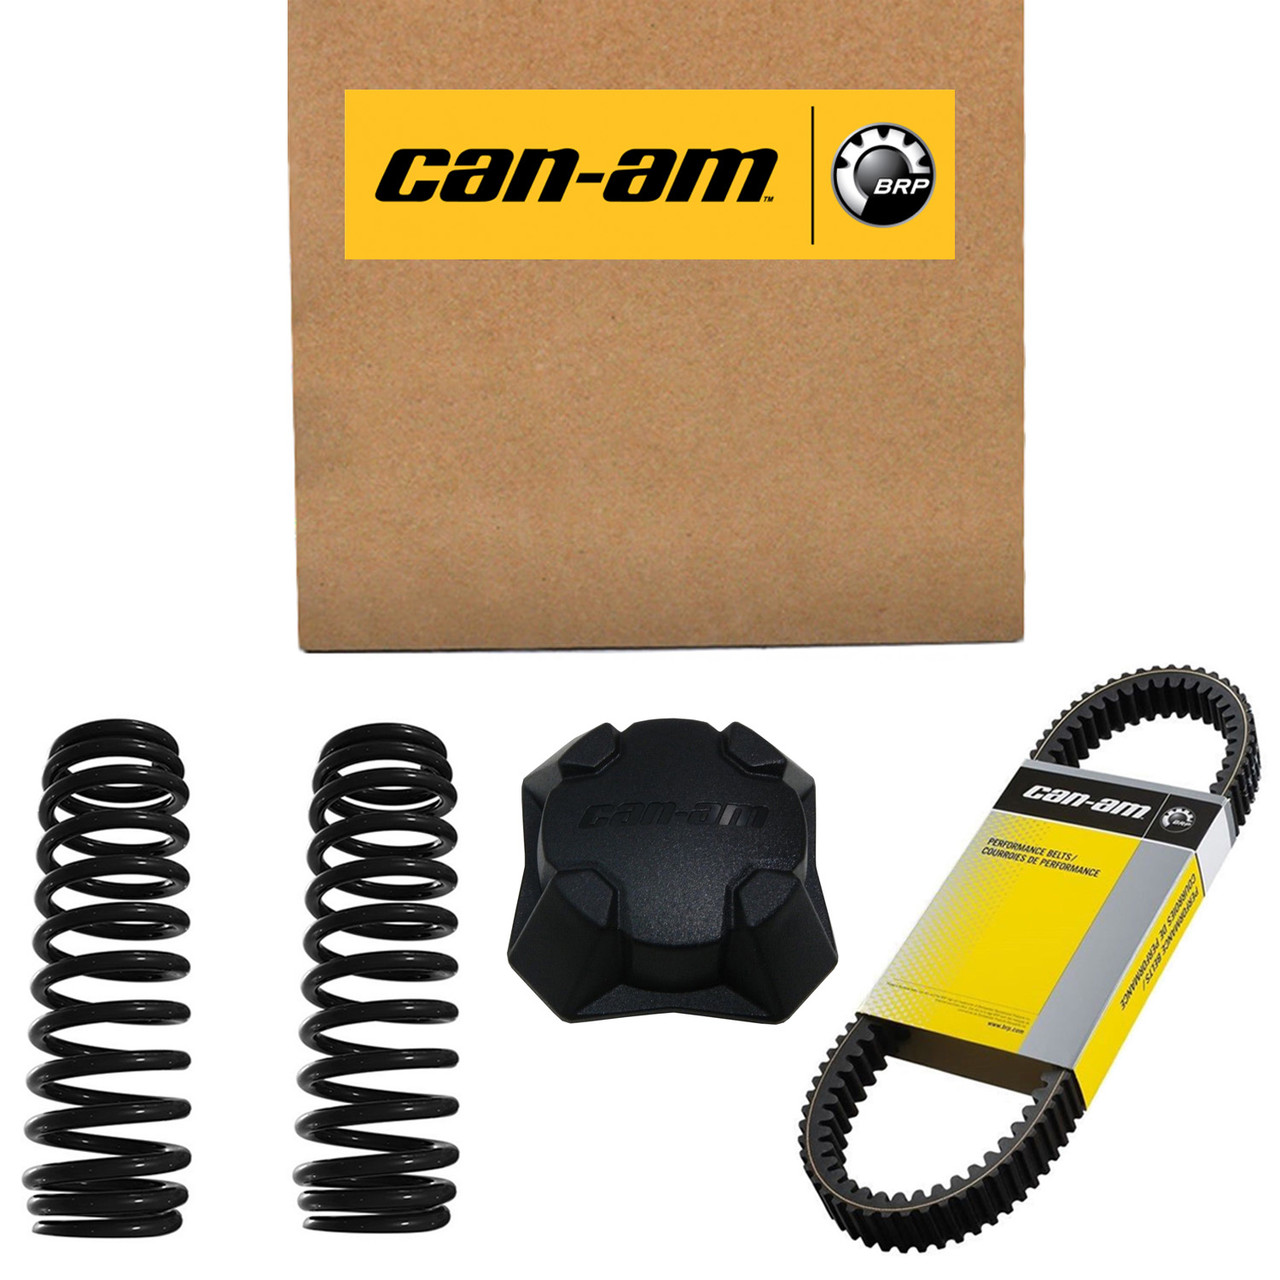 Can-Am New OEM Rh Trim Carbon Black, 705012357